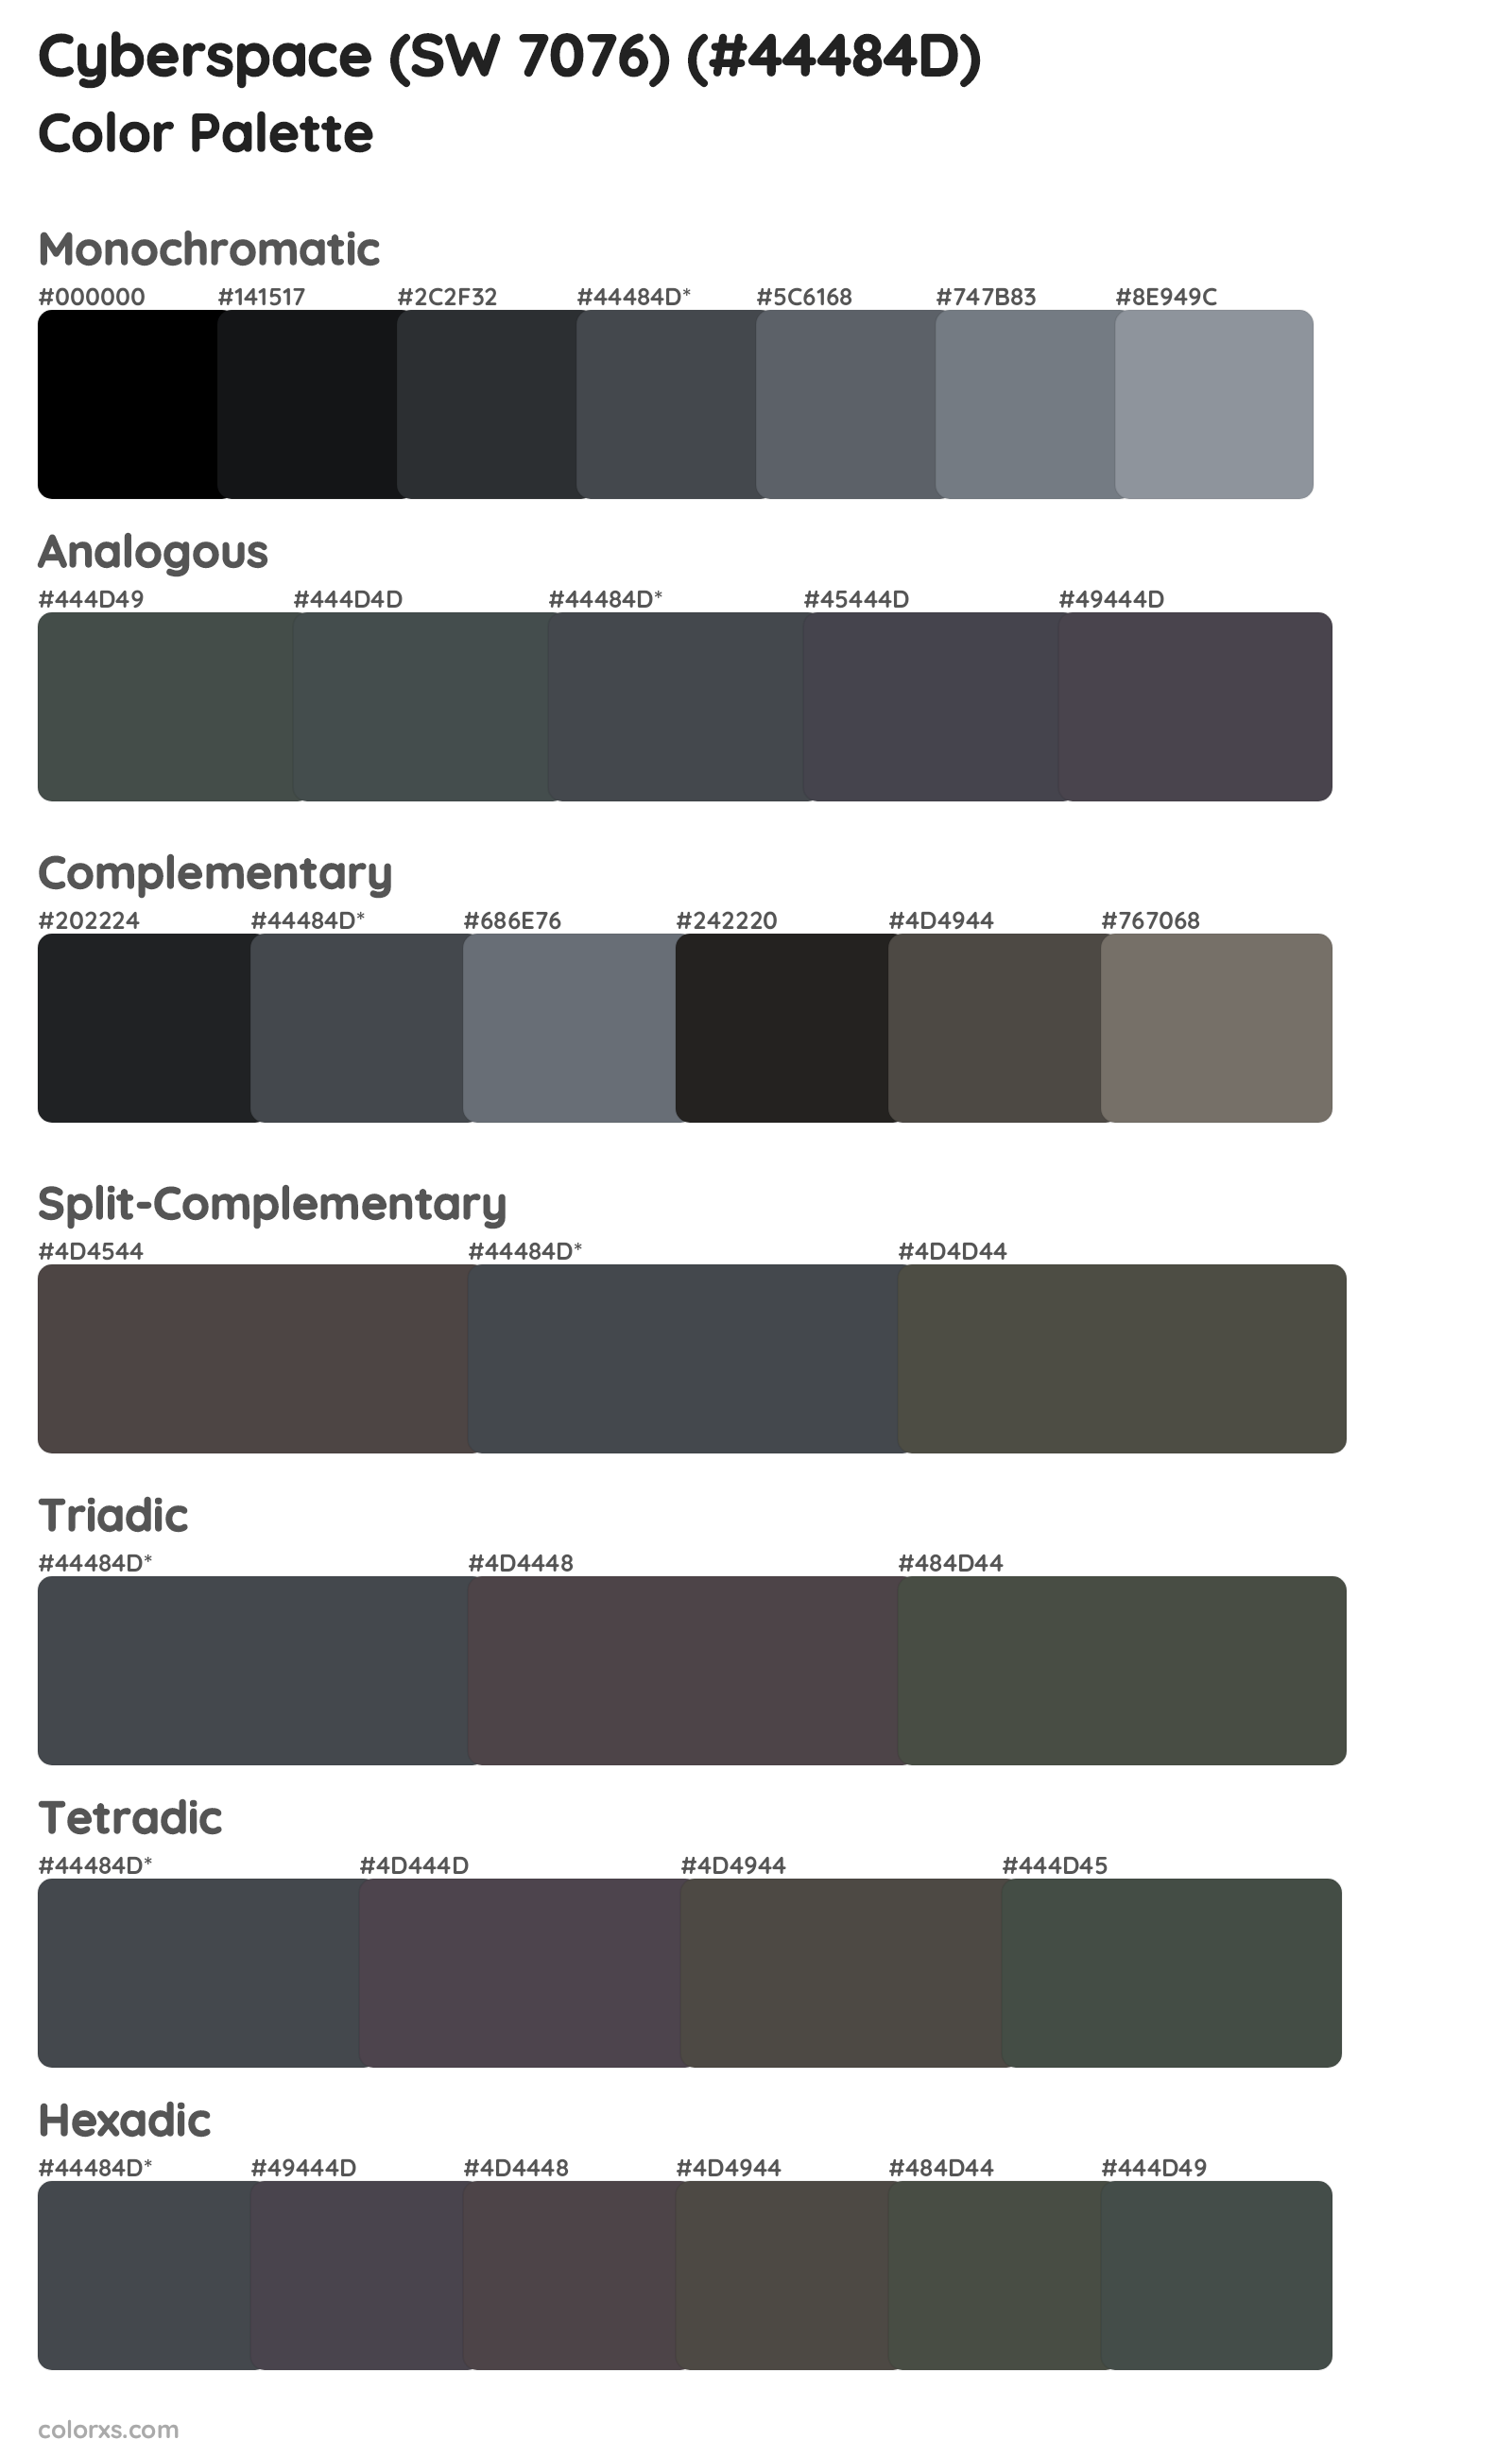 Cyberspace (SW 7076) Color Scheme Palettes